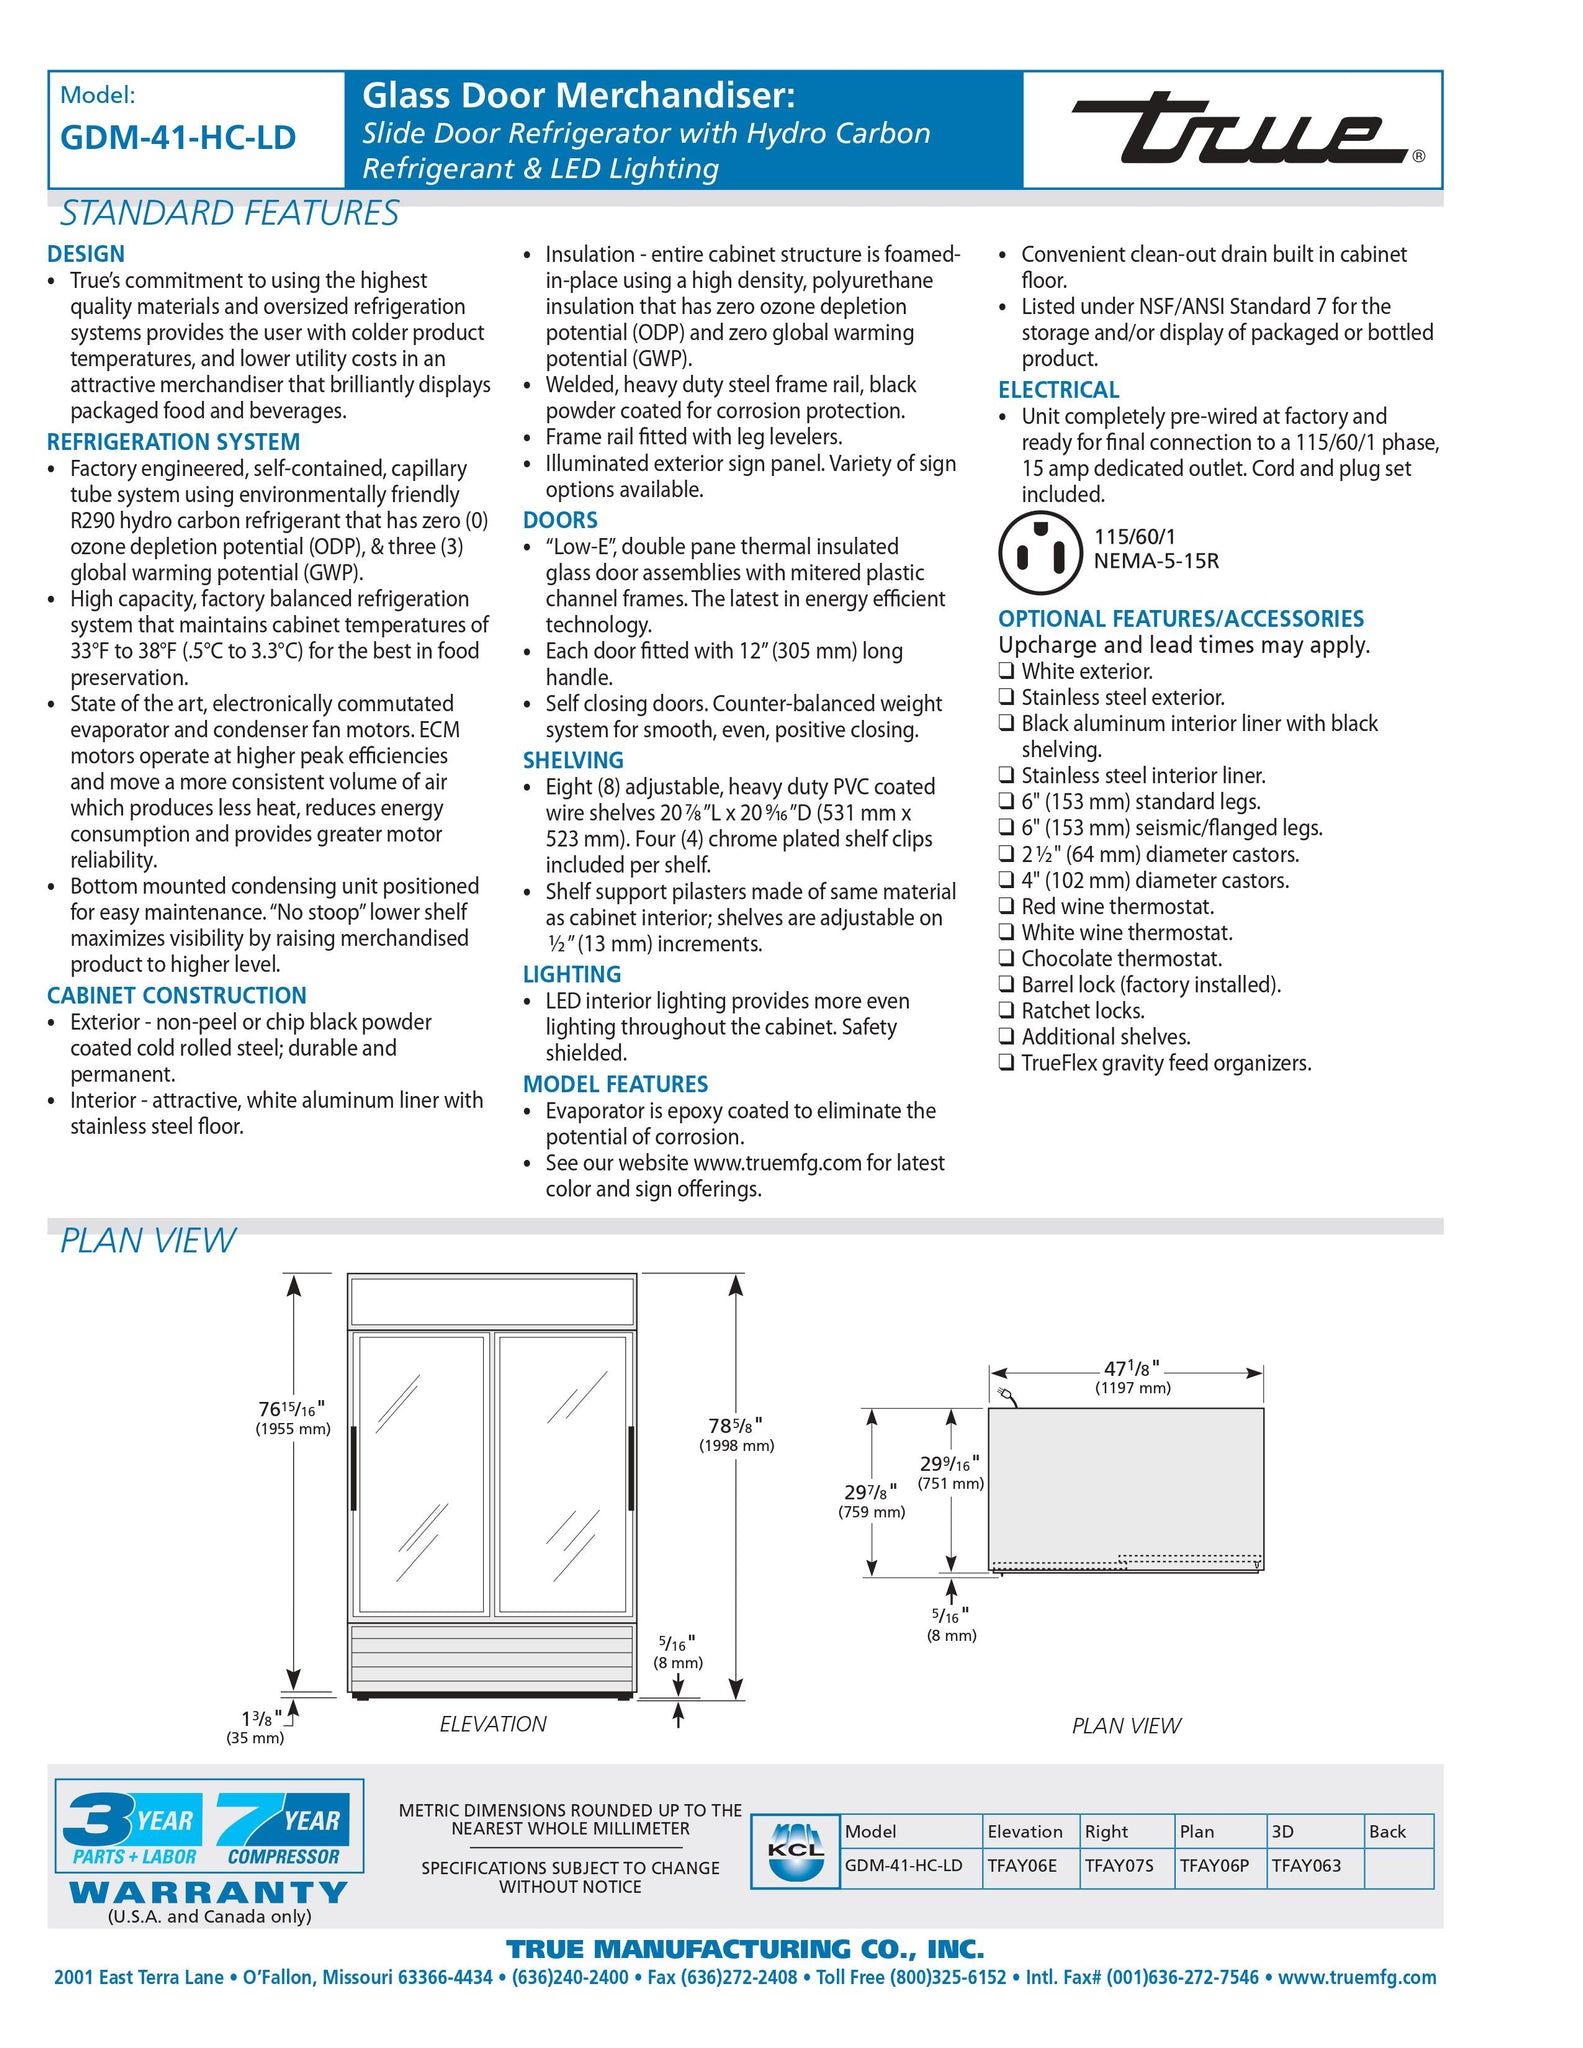 True GDM-41-HC-LD 48" Two Section Glass Door Merchandiser Refrigerator